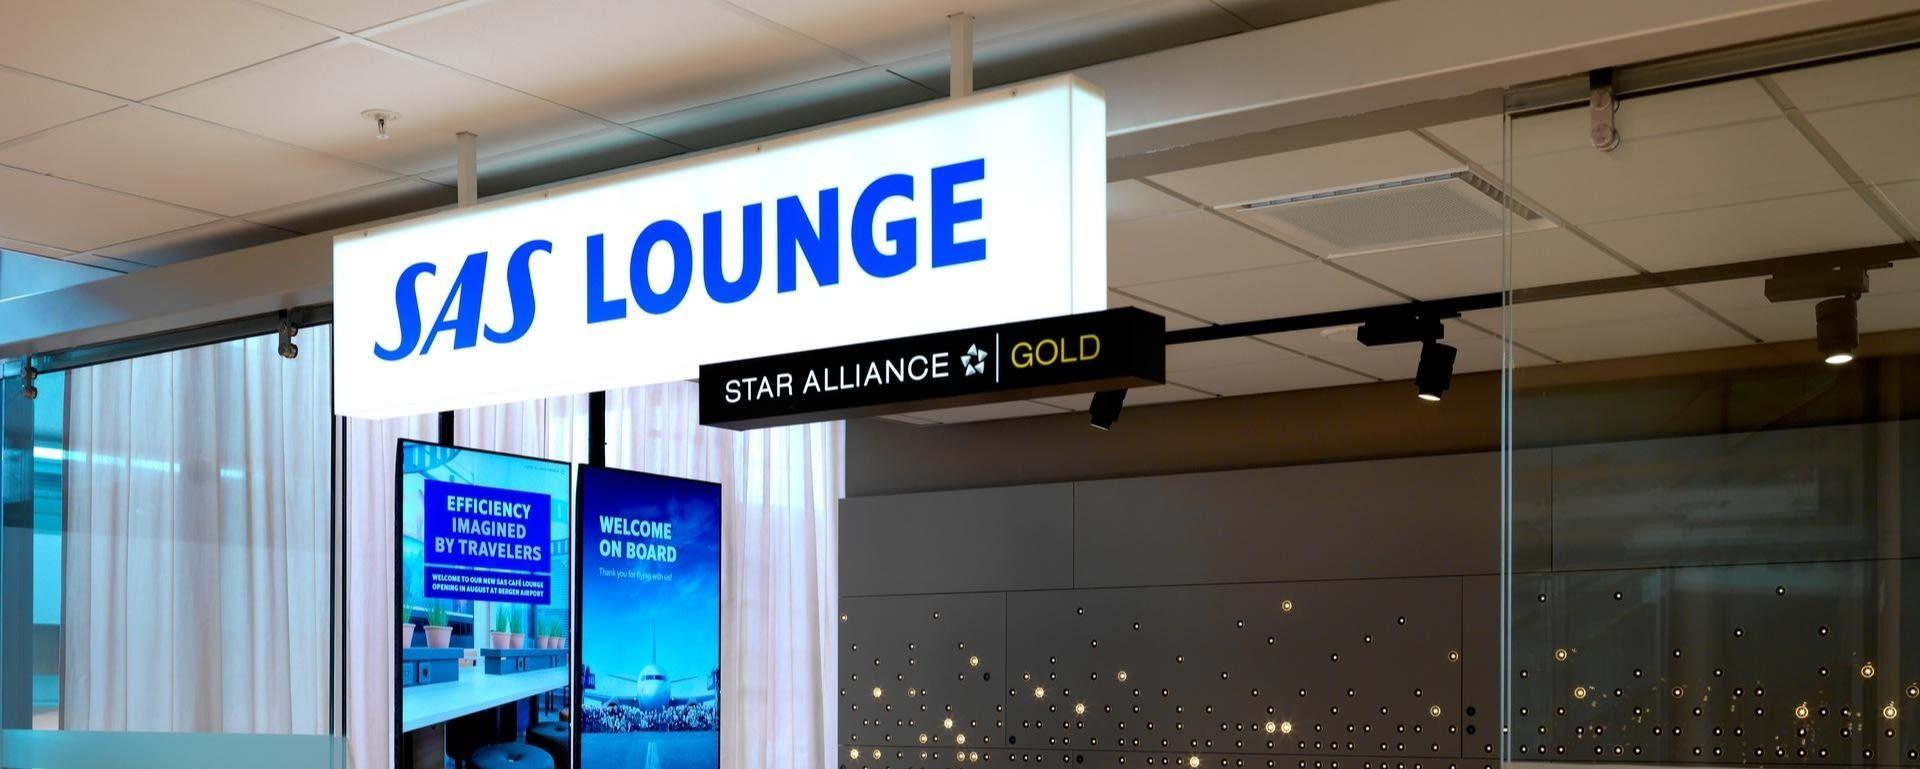 SAS lounge at the airport